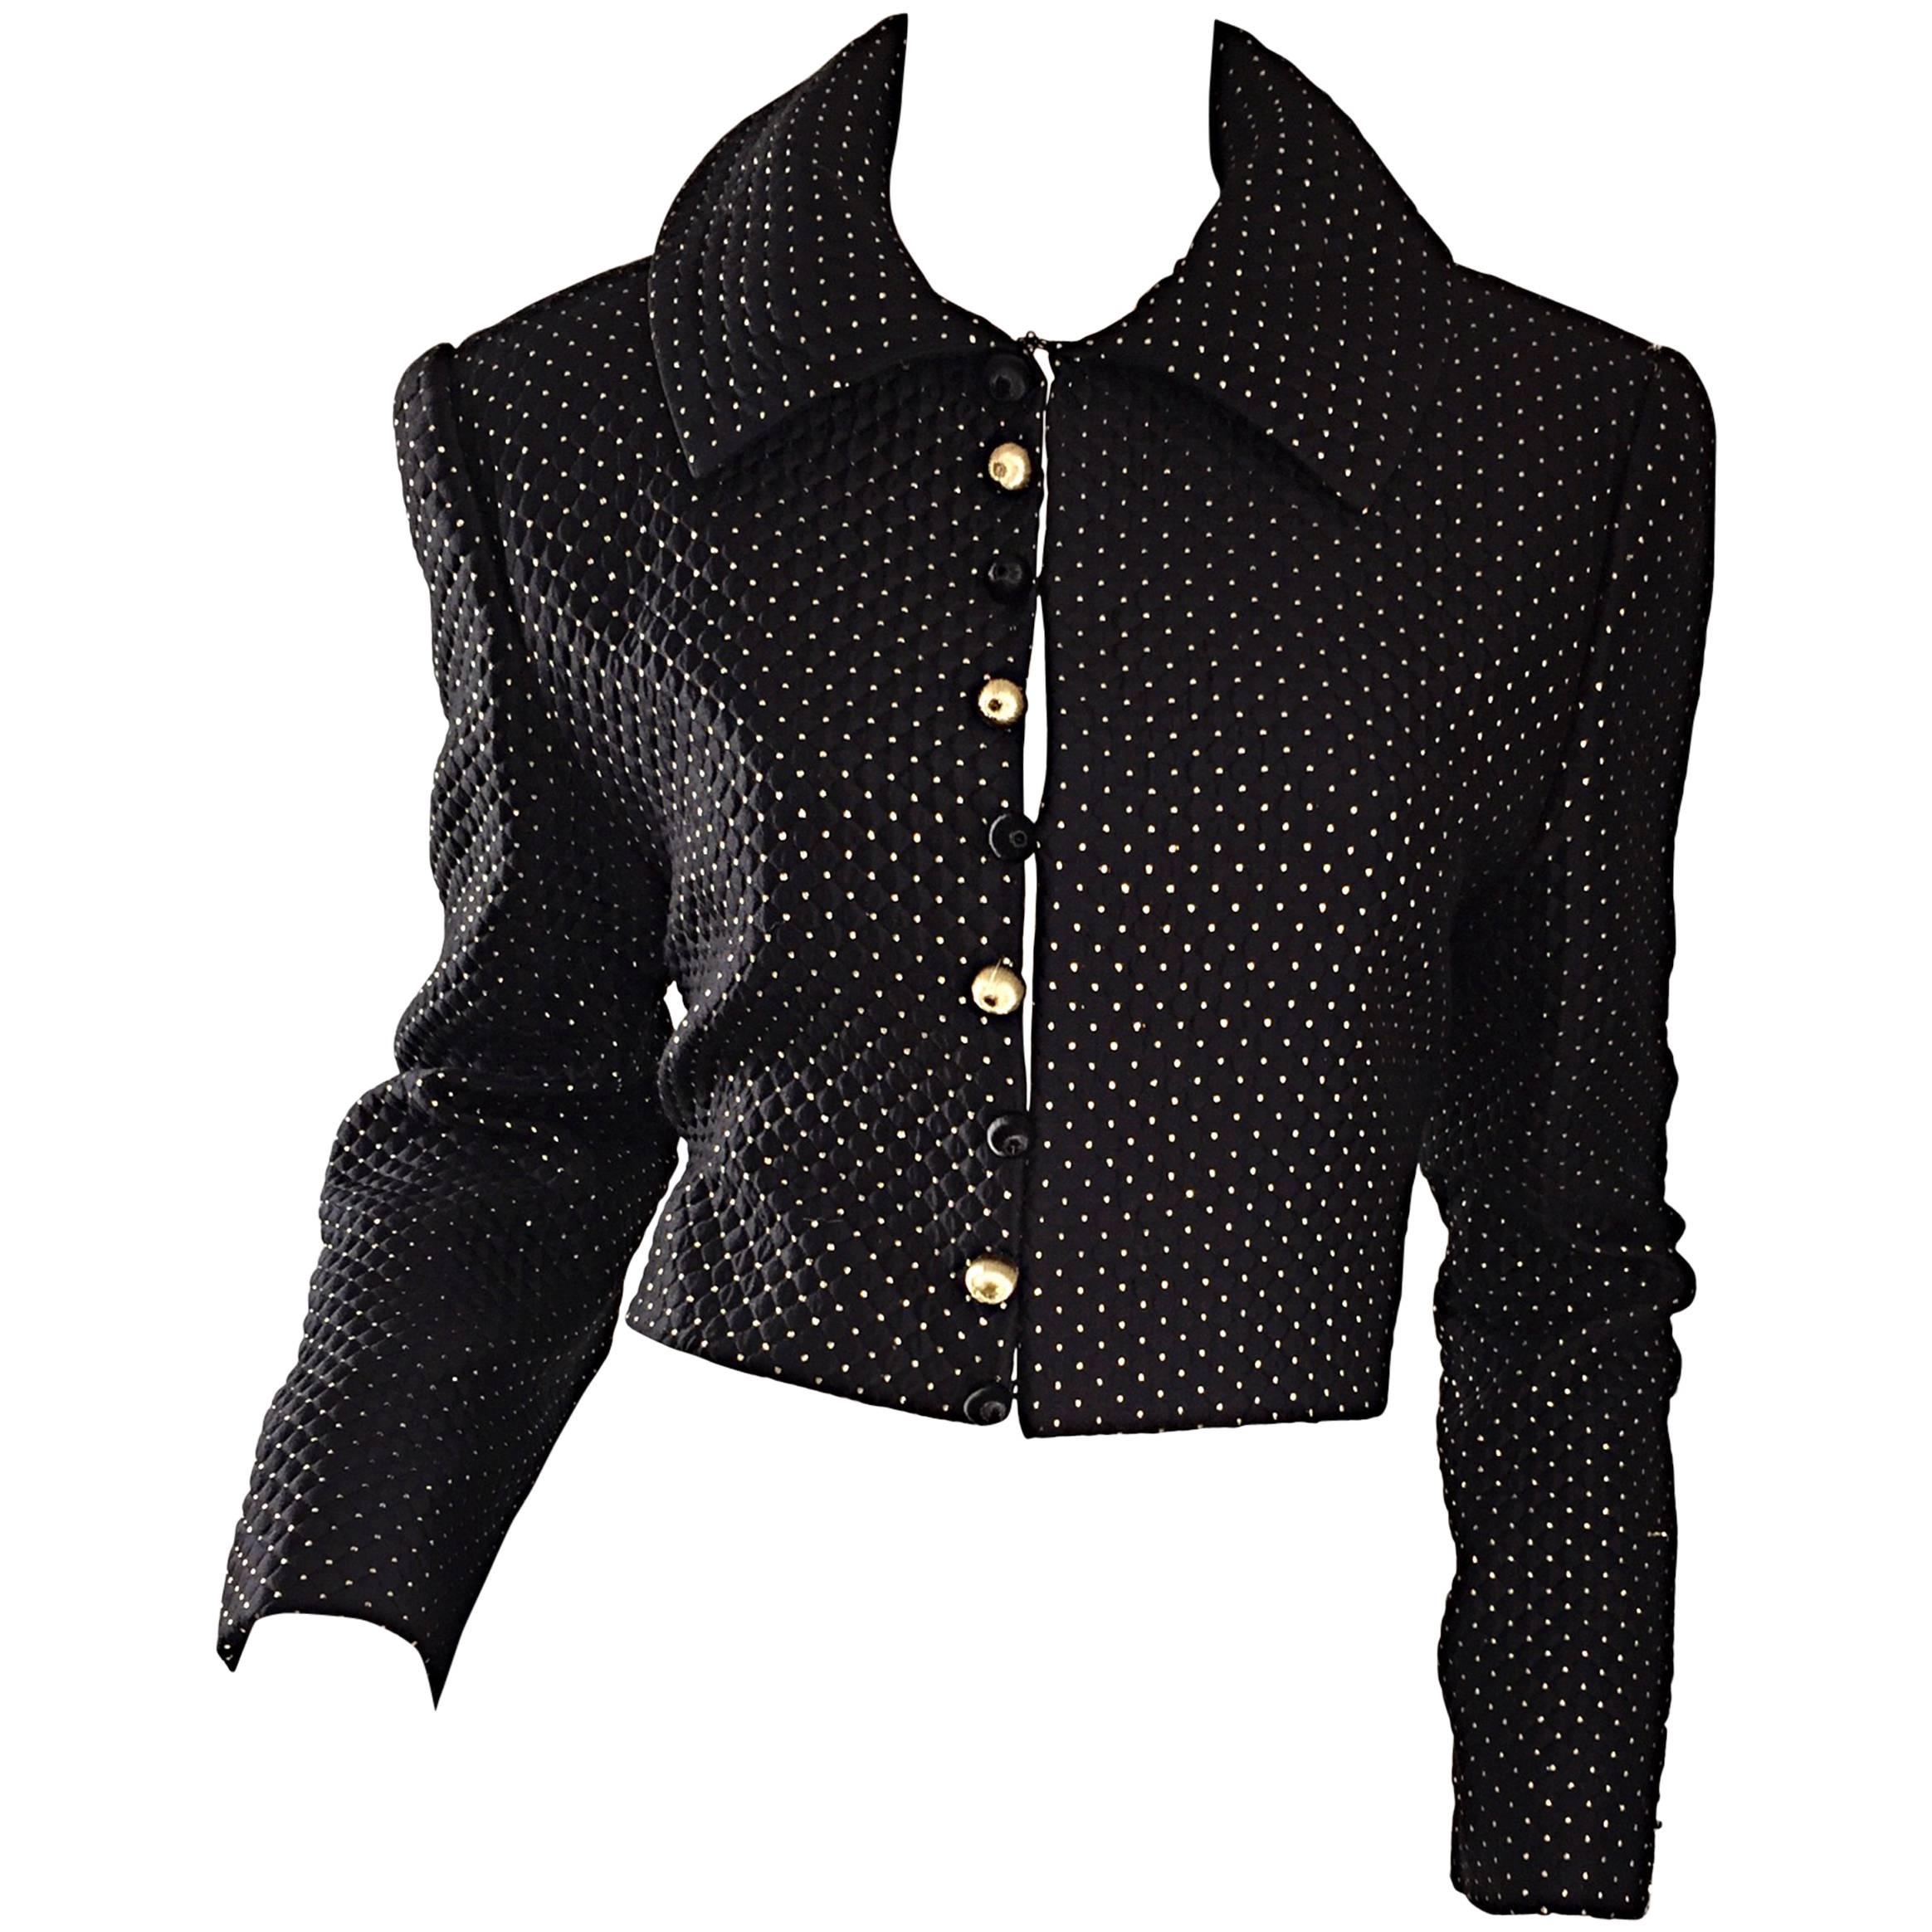 Carolyne Roehm for Saks 5th Avenue 1990s Black + Gold Silk Cropped Bolero Jacket